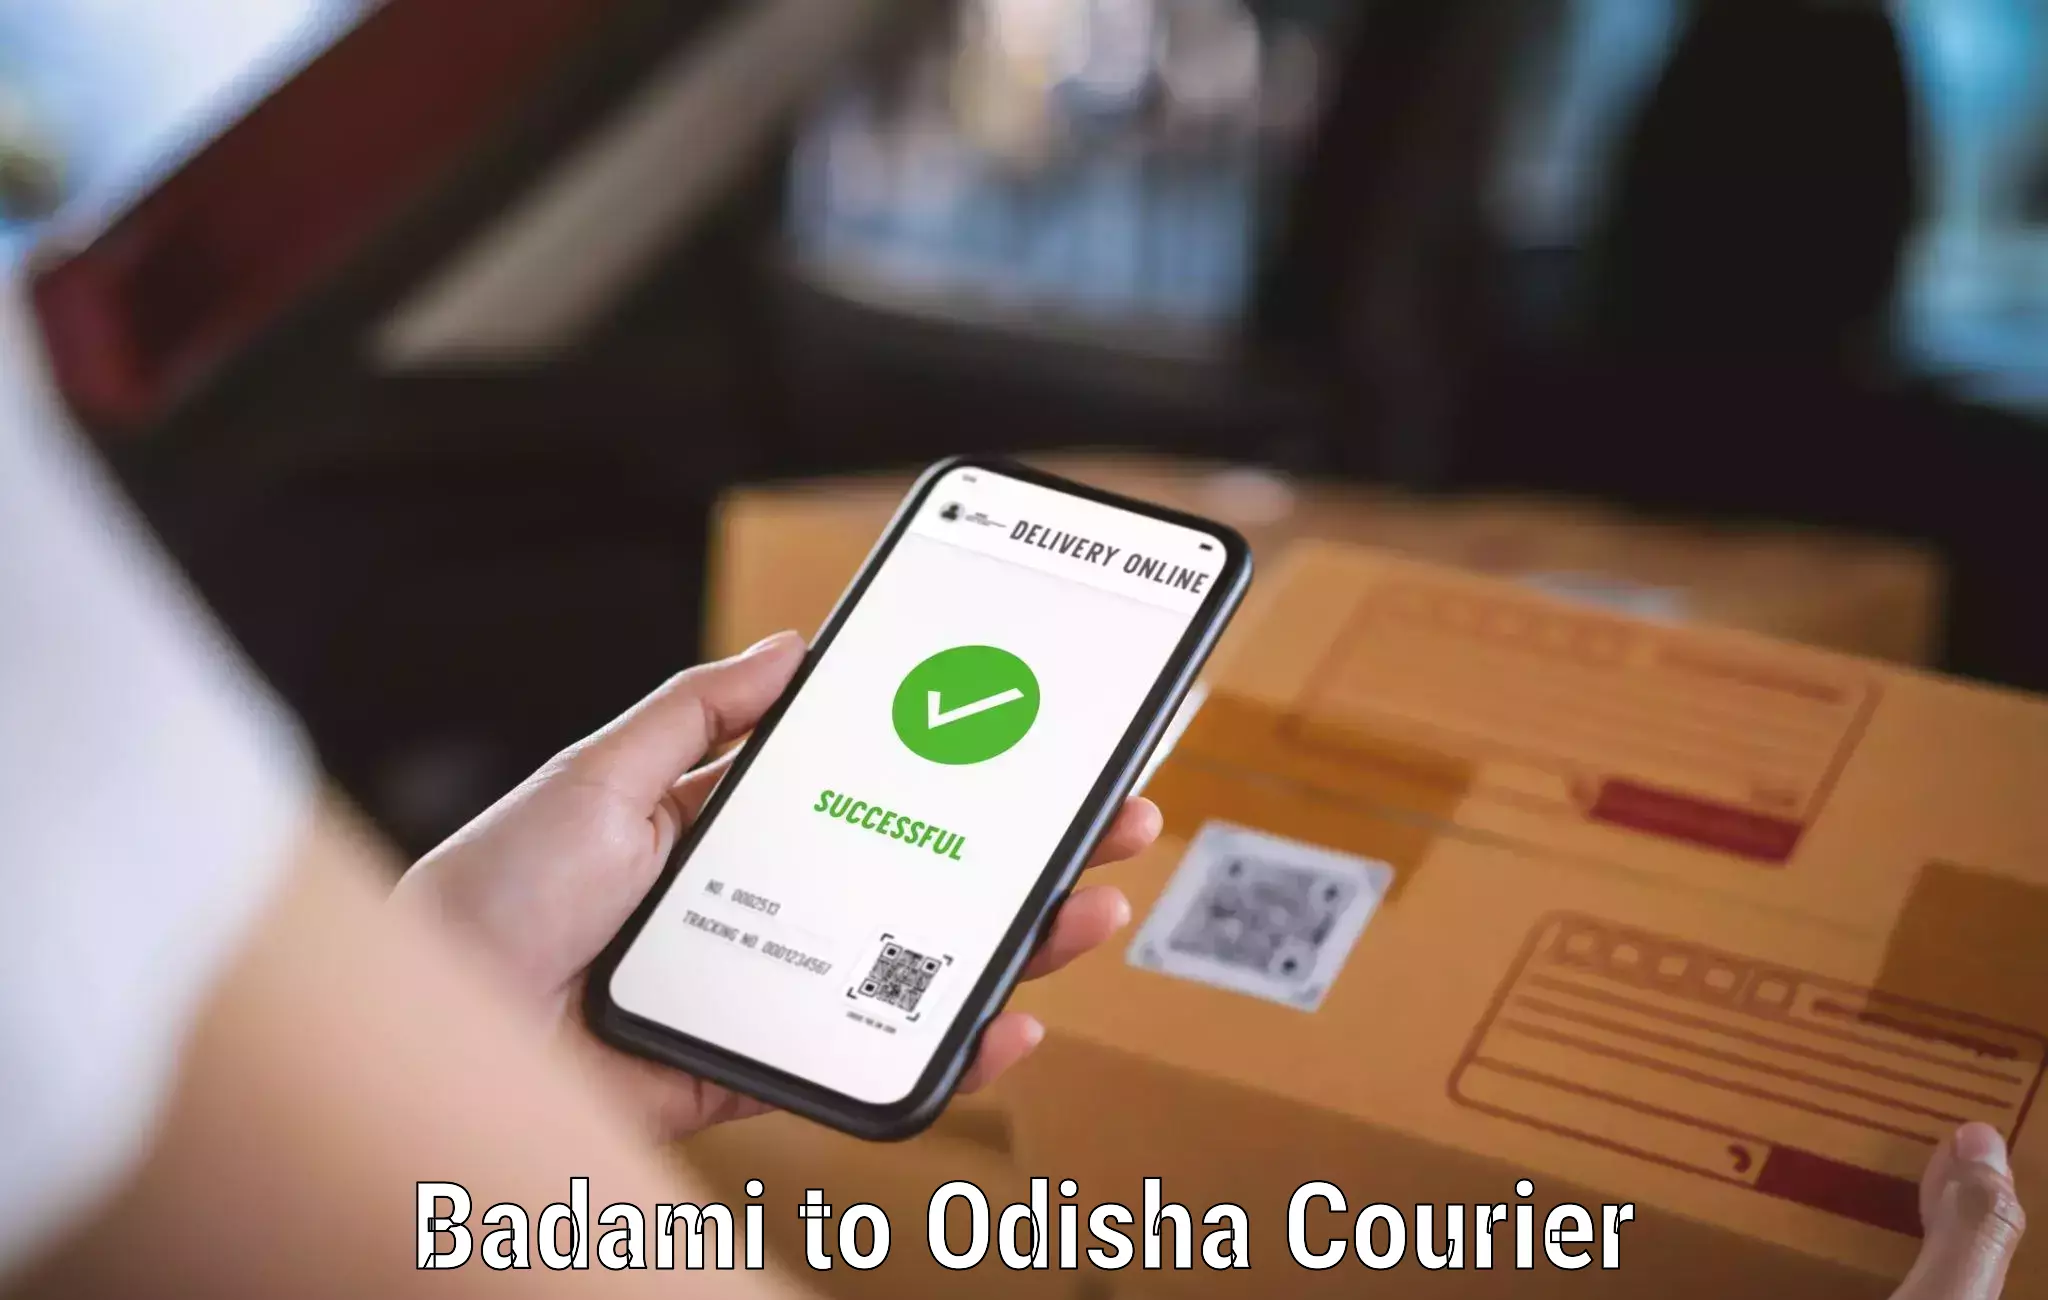 Courier app Badami to Sankerko